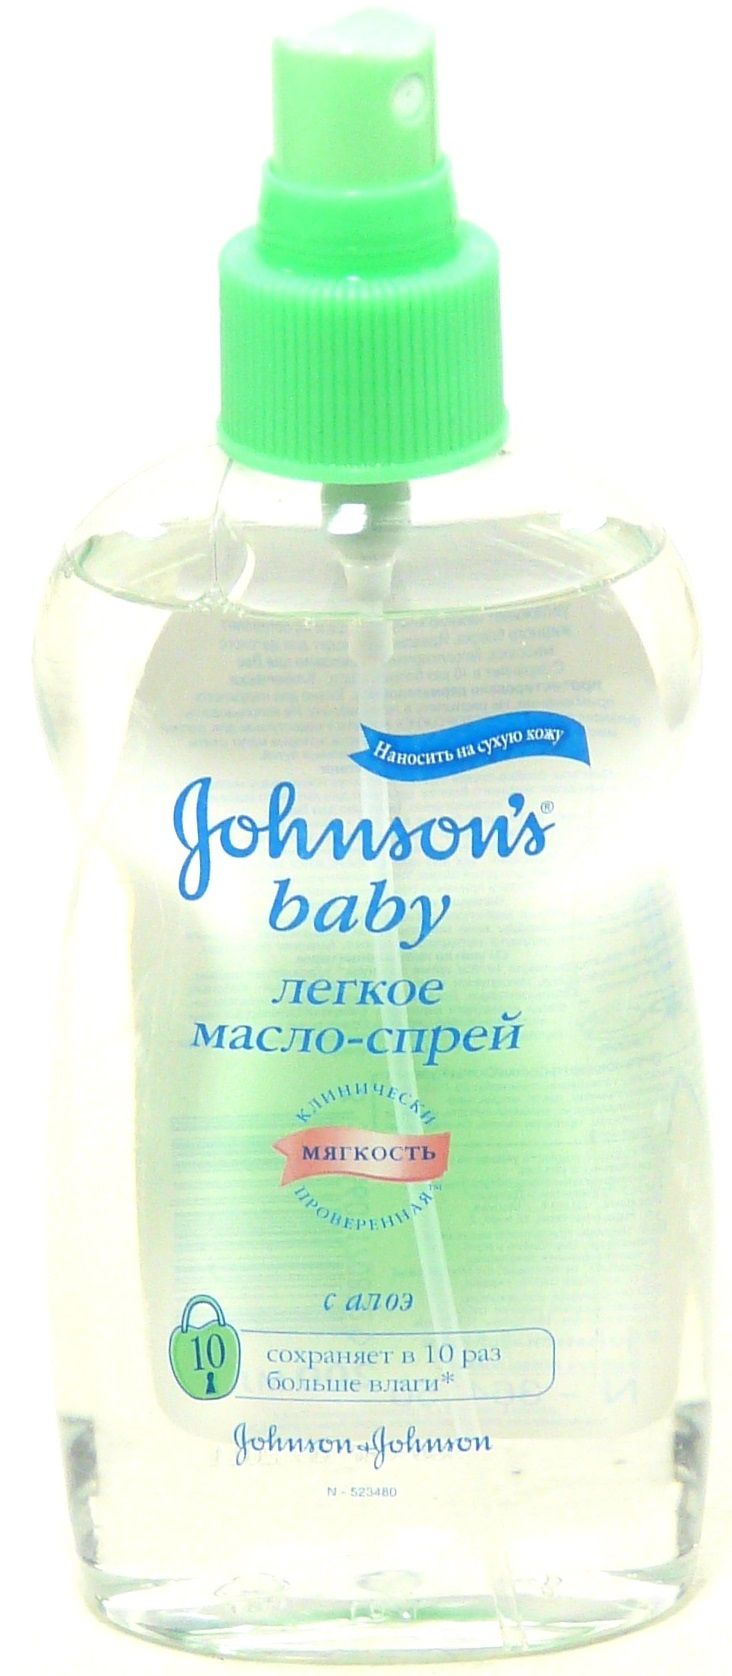 Johnson's baby Масло-спрей с алоэ